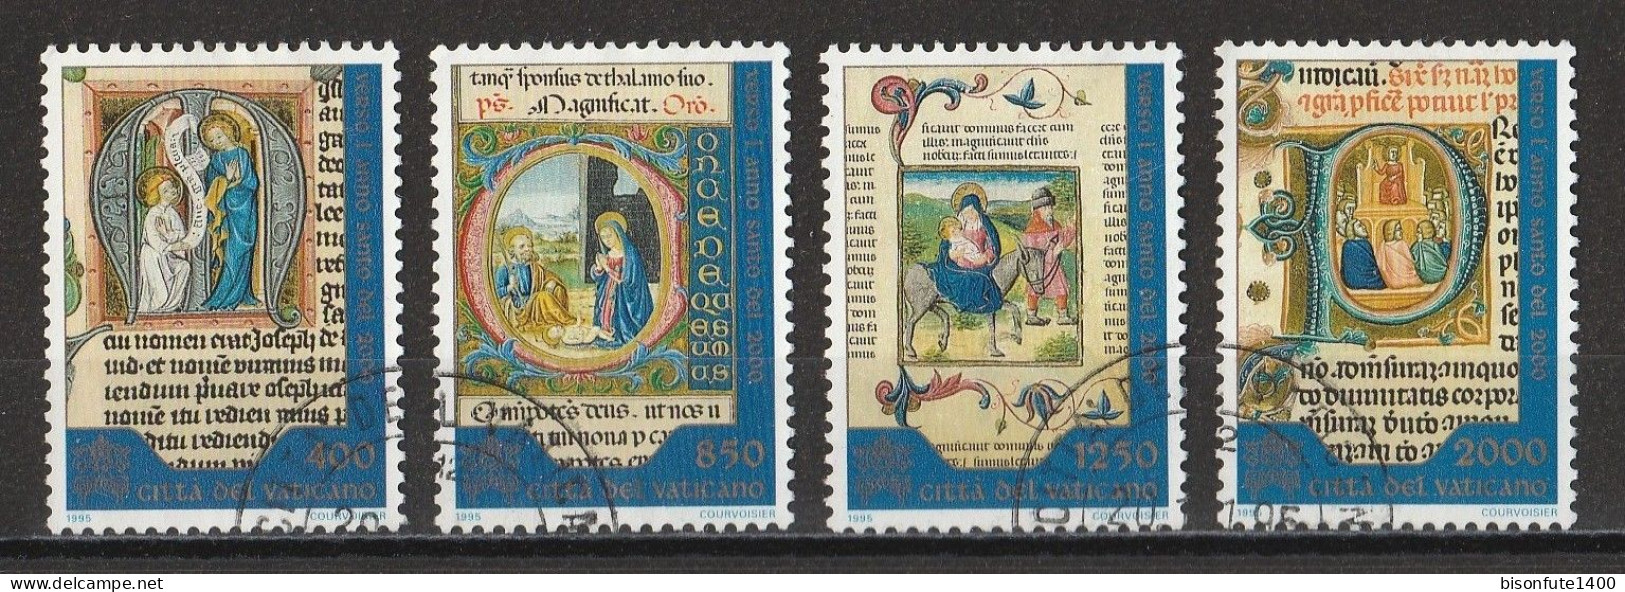 Vatican 1995 : Timbres Yvert & Tellier N° 1025 - 1026 - 1027 Et 1028 Oblitérés - Usati